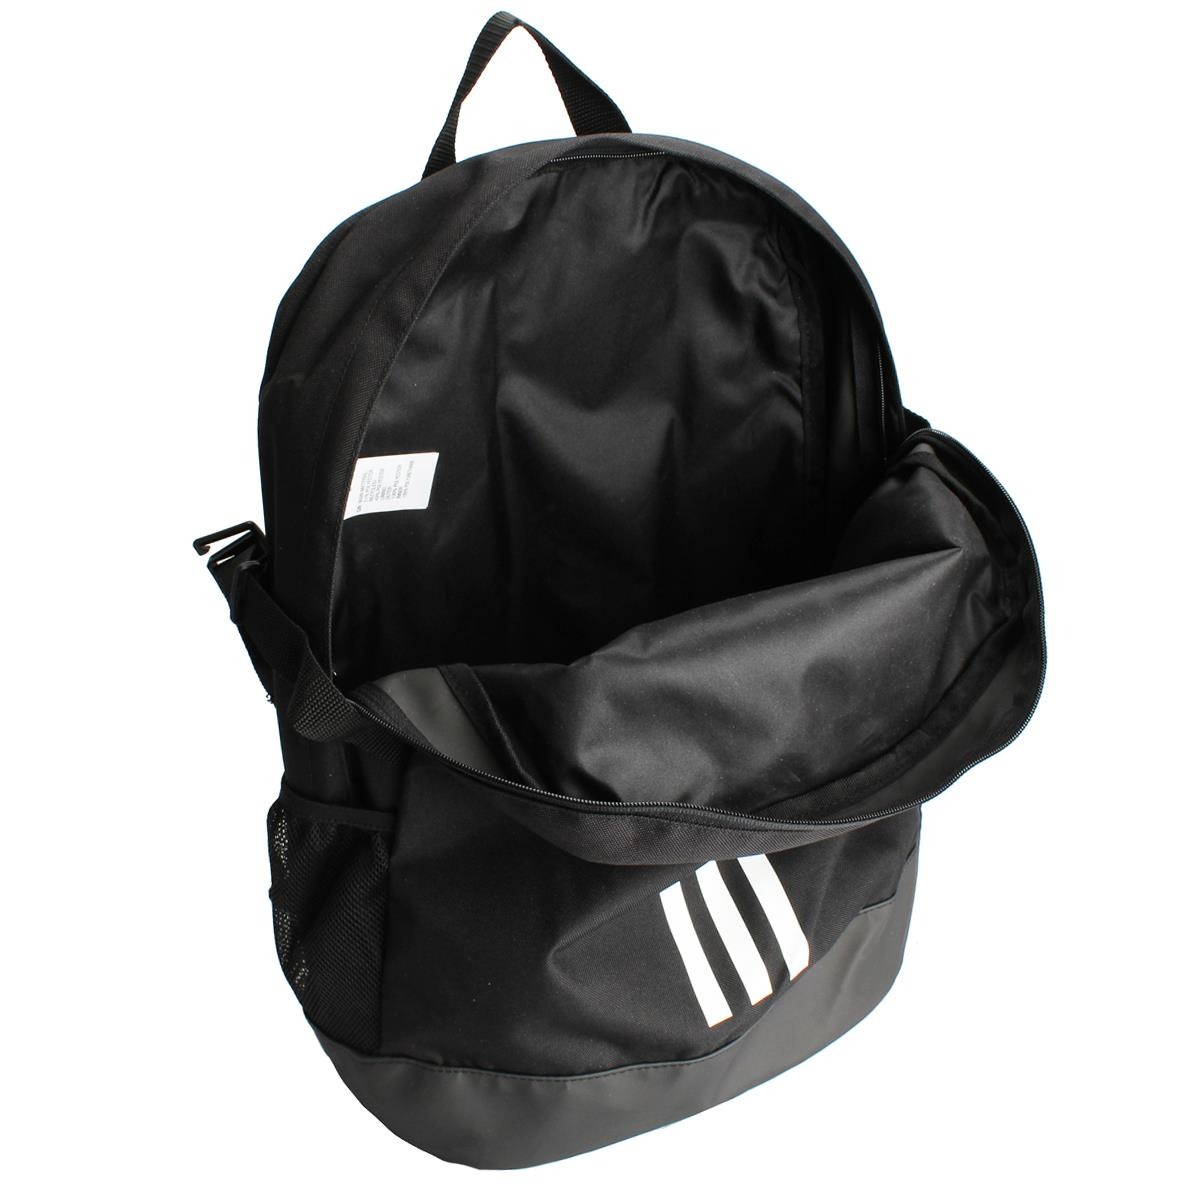 Adidas Women Backpack Gym Bag Ladies Girls Bag Size Small | eBay